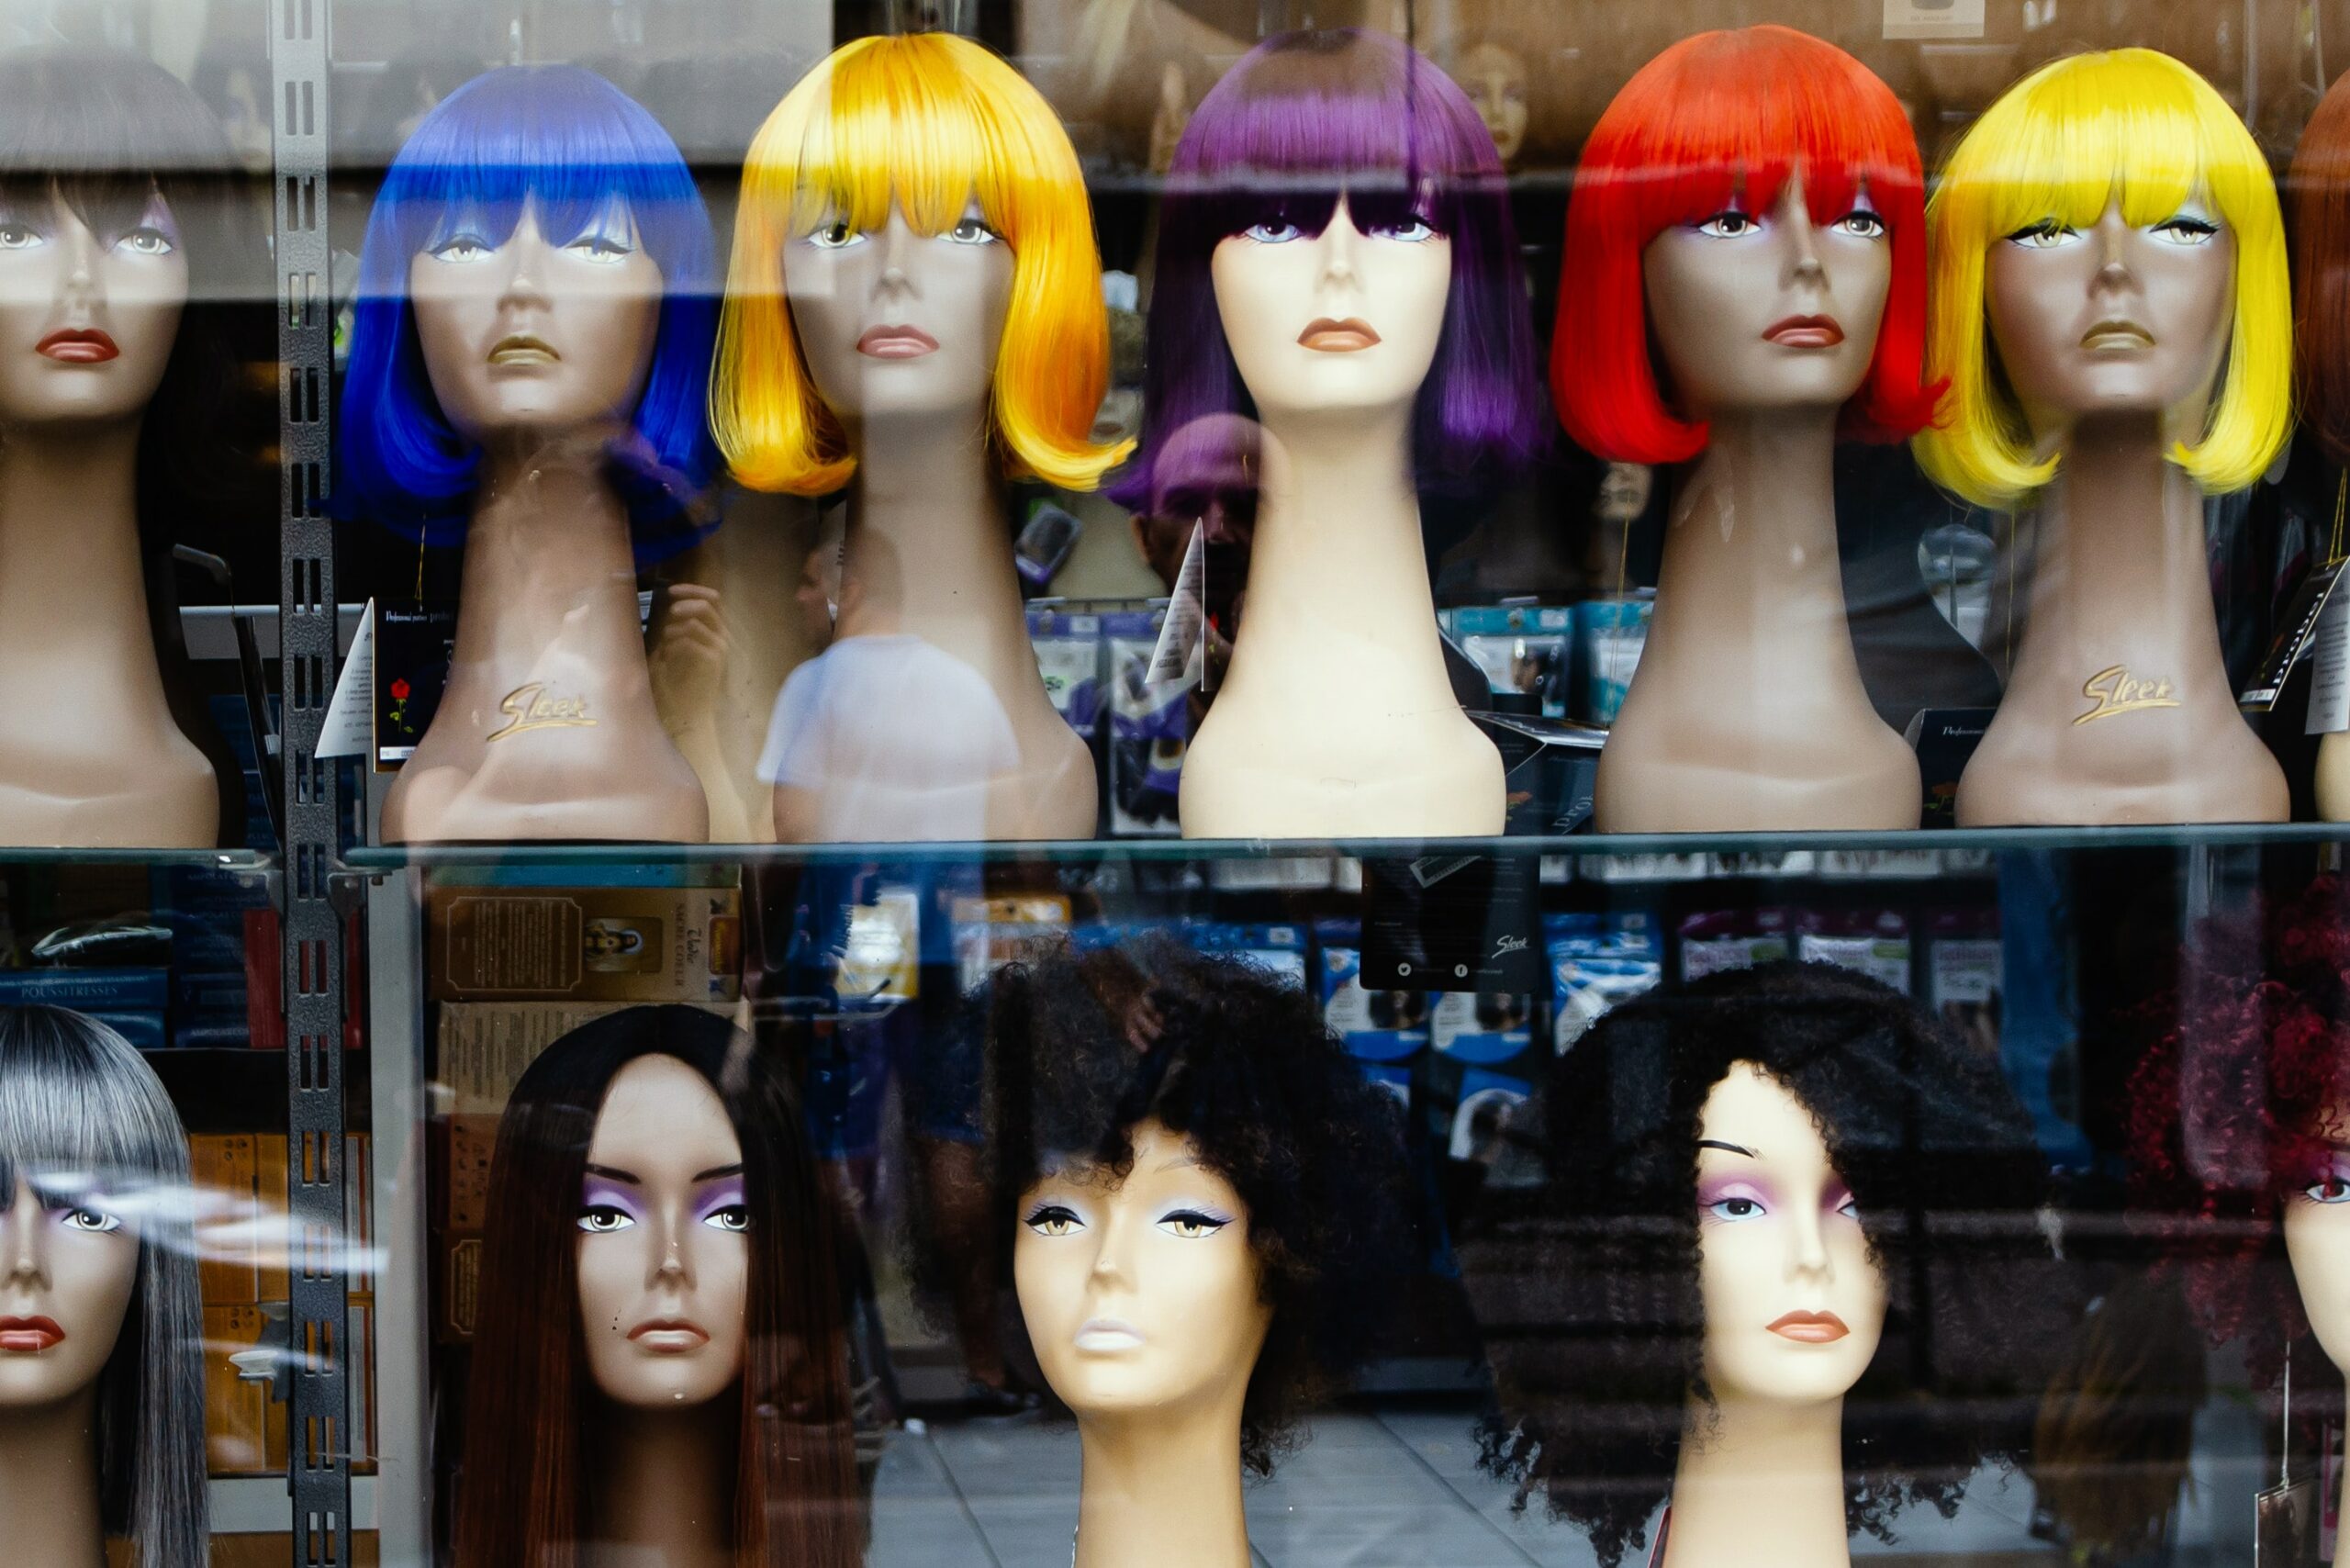 Image of wigs in a shop window